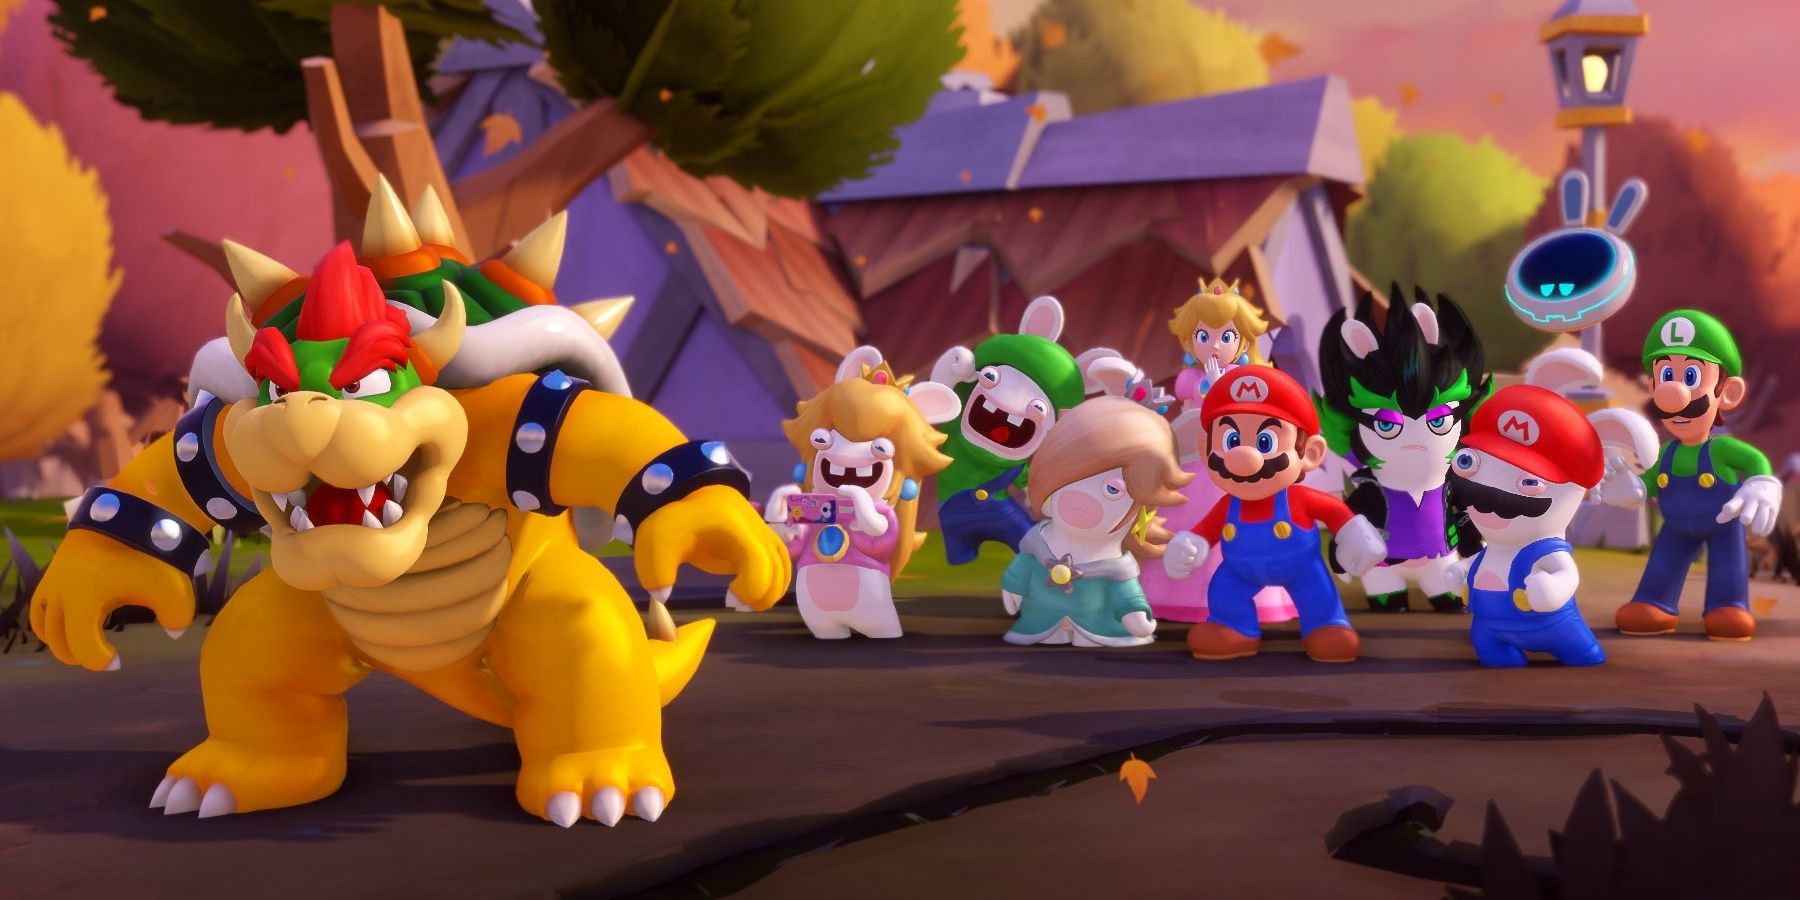 Mario, friends, and Rabbids join the fight in Mario + Rabbids: Kingdom Battle.